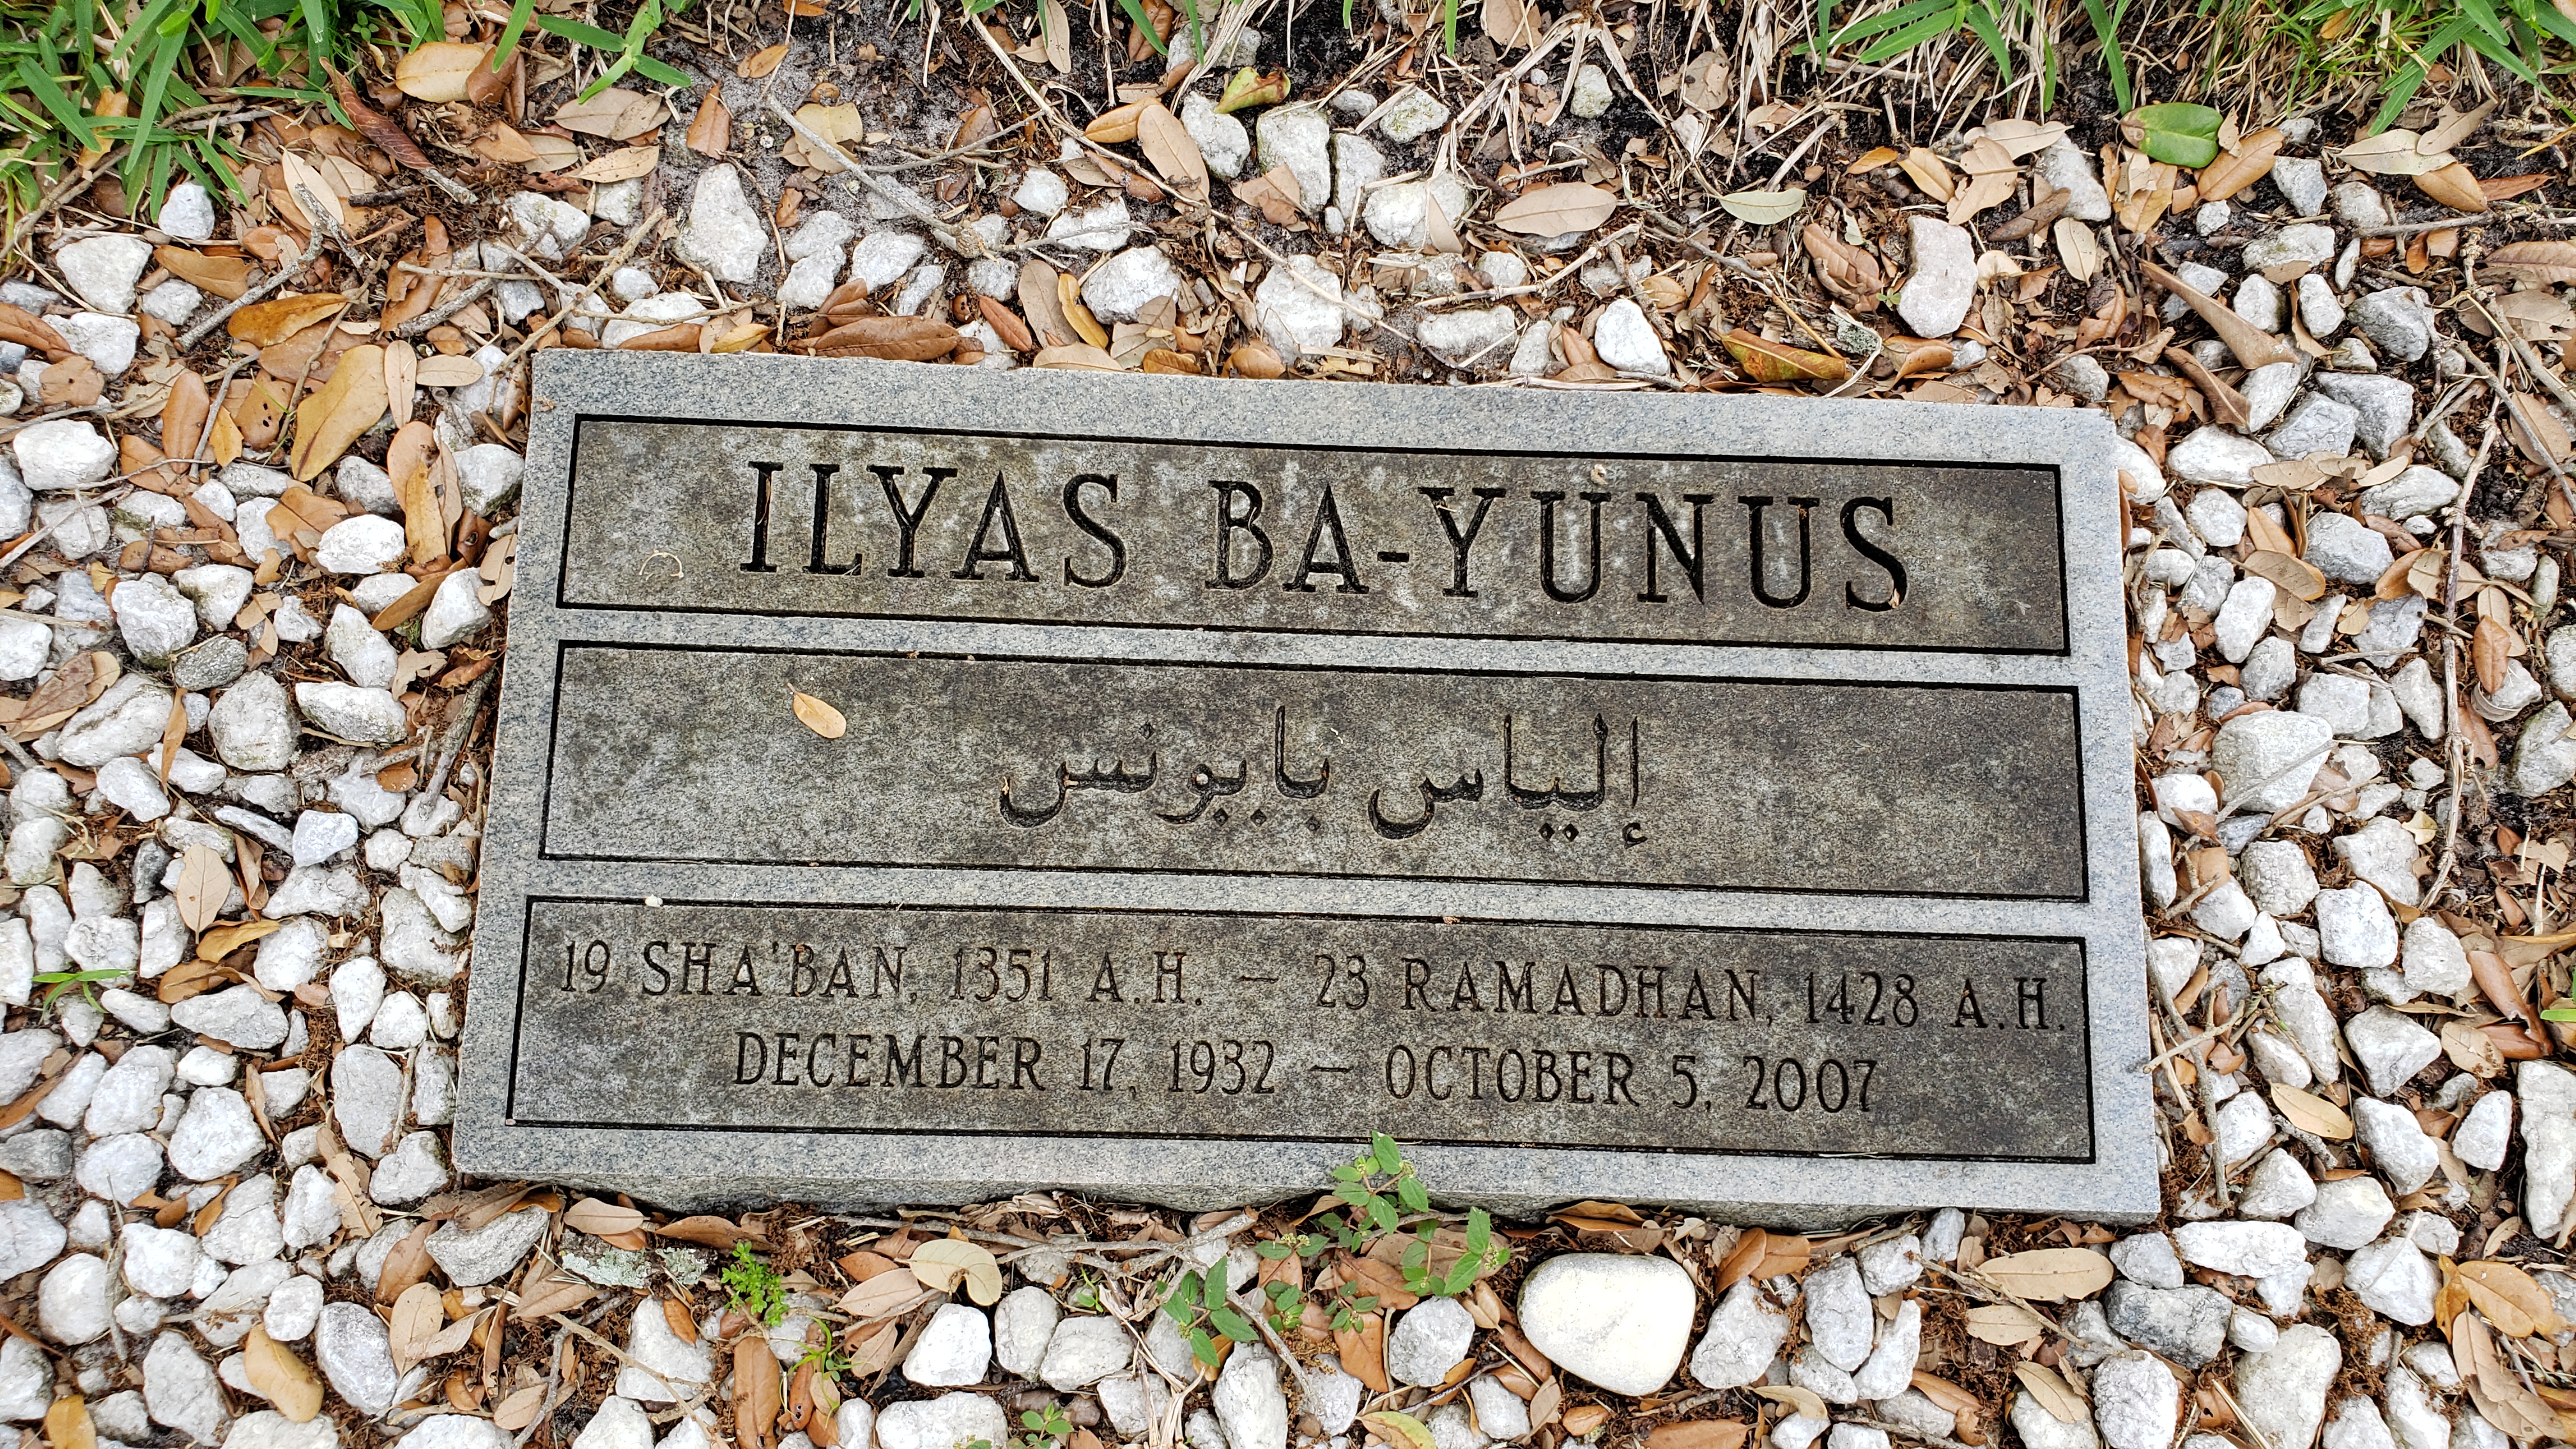 Ilyas Ba-Yunus